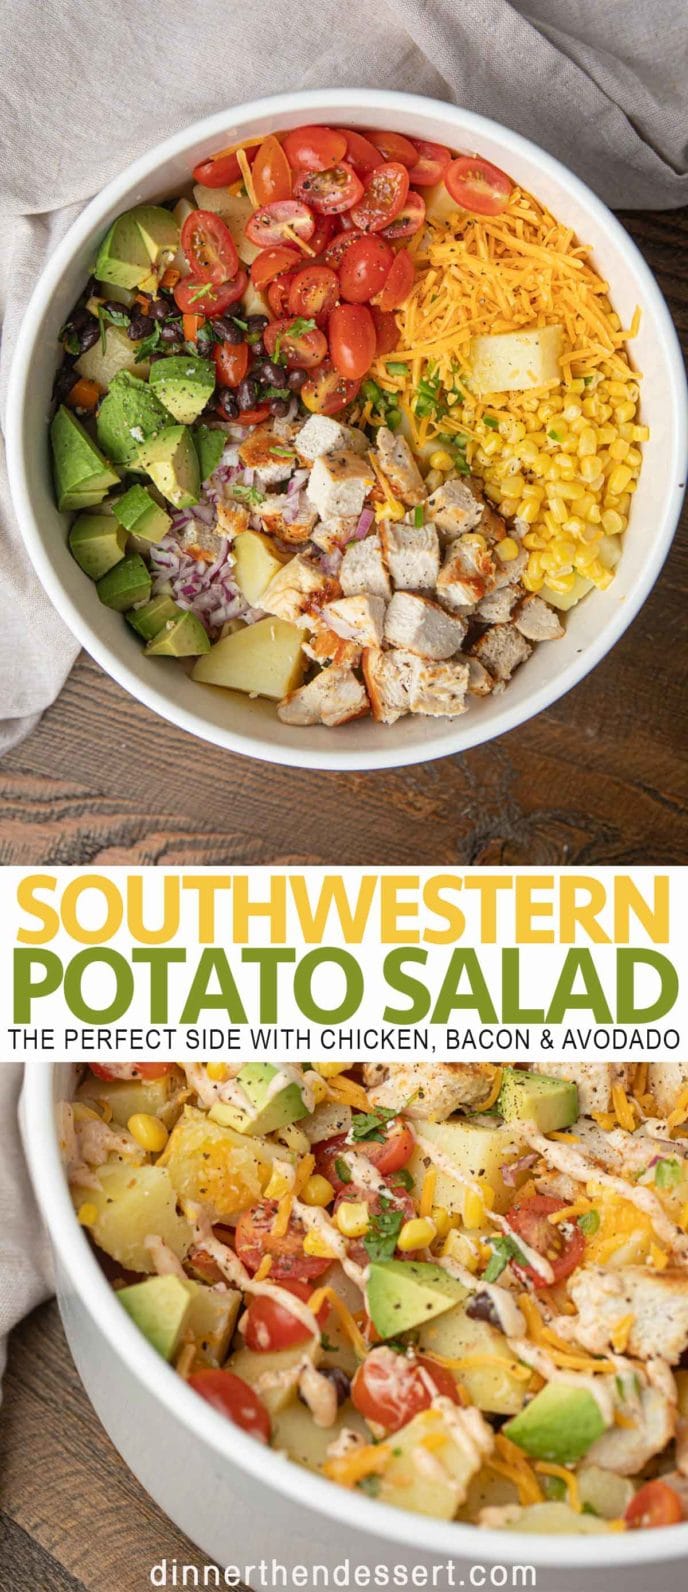 Southwestern Potato Salad